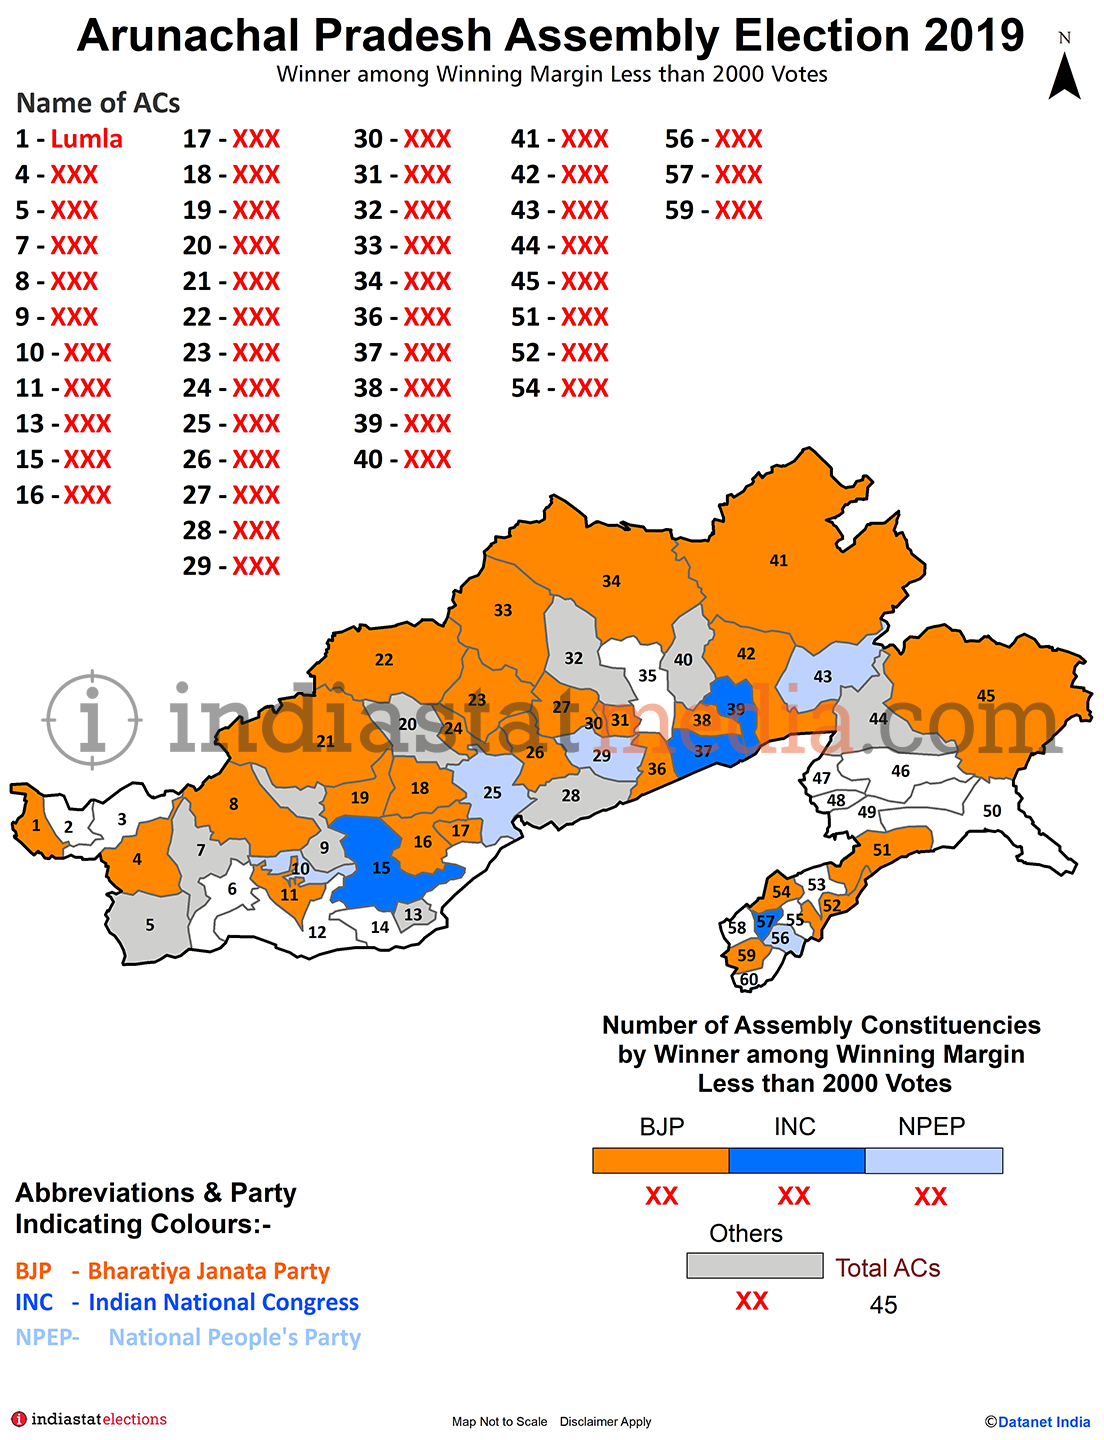 Winner among Winning Margin Less than 2000 Votes in Arunachal Pradesh (Assembly Election - 2019)